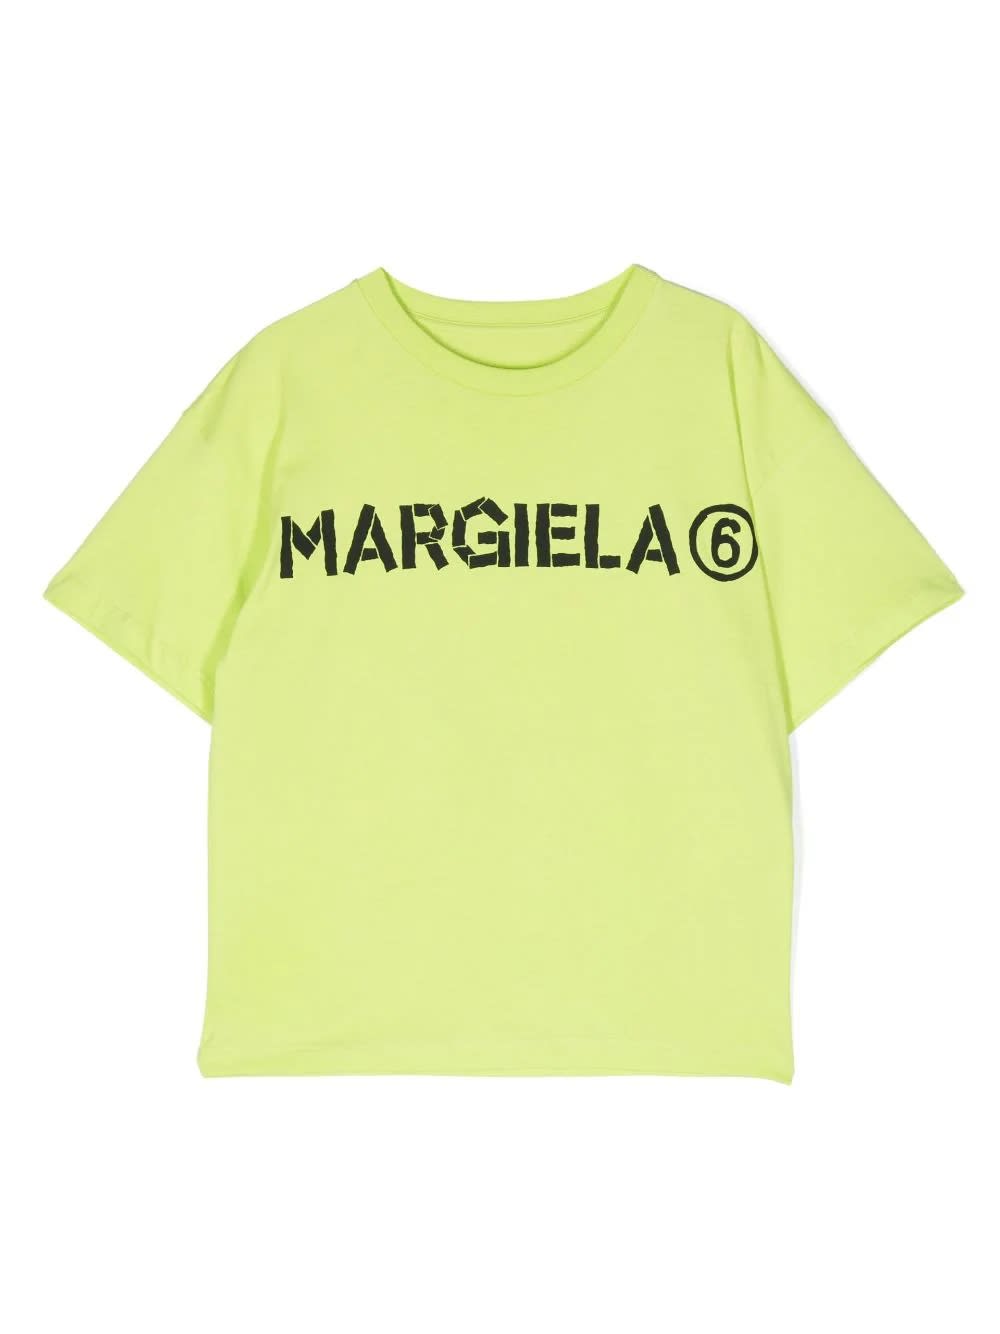 MM6 MAISON MARGIELA LOGO T-SHIRT